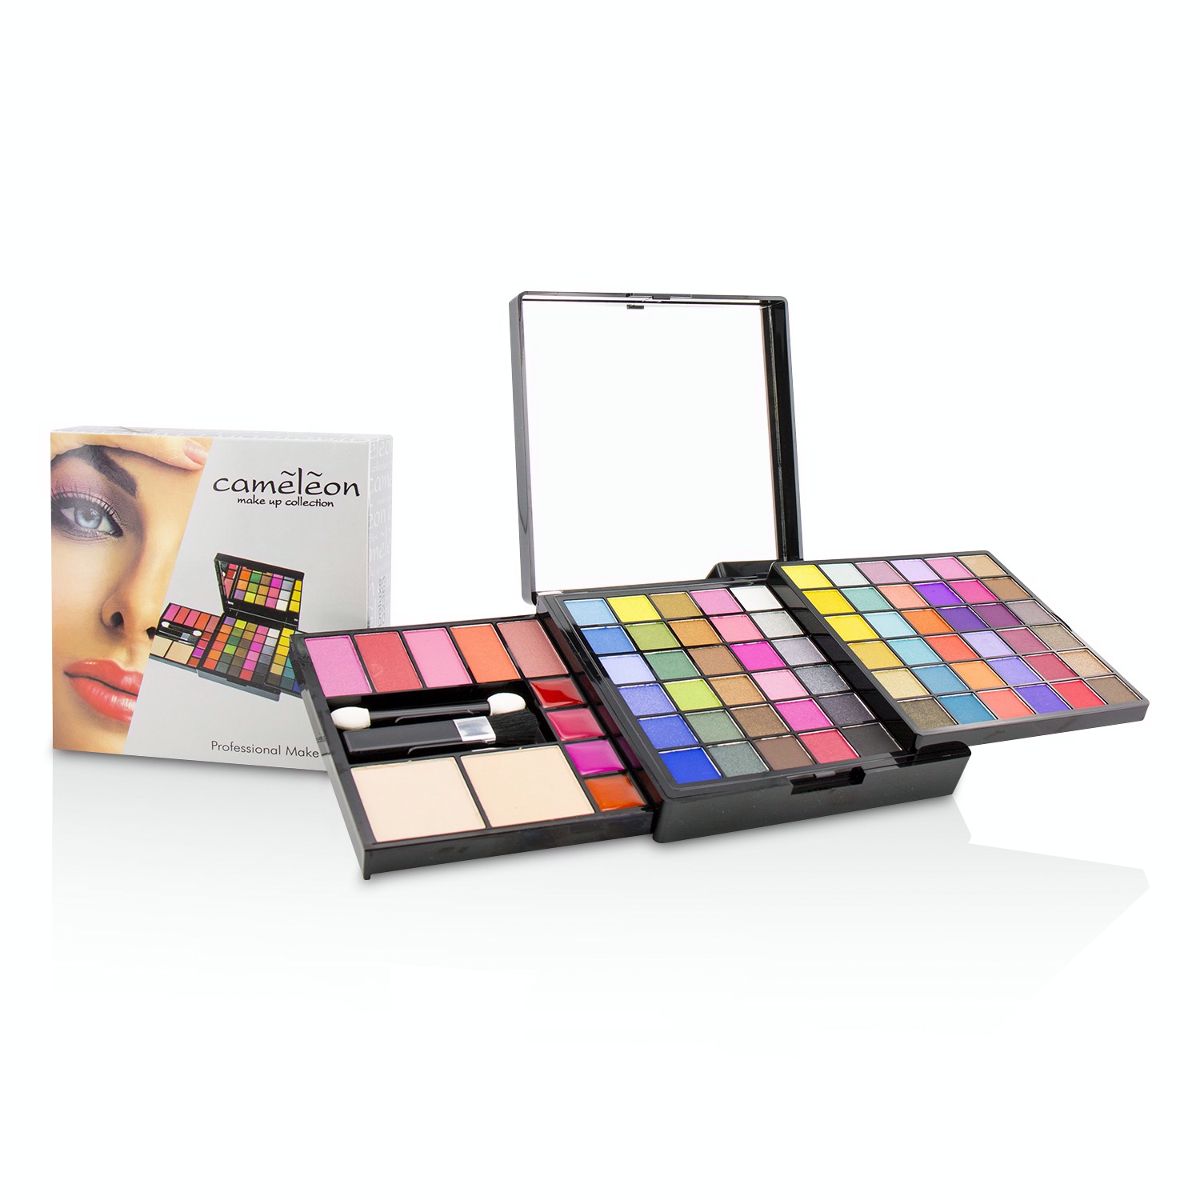 MakeUp Kit Deluxe G2363 (66x Eyeshadow 5x Blusher 2x Pressed Powder 4x Lipgloss 3x Applicator) Cameleon Image